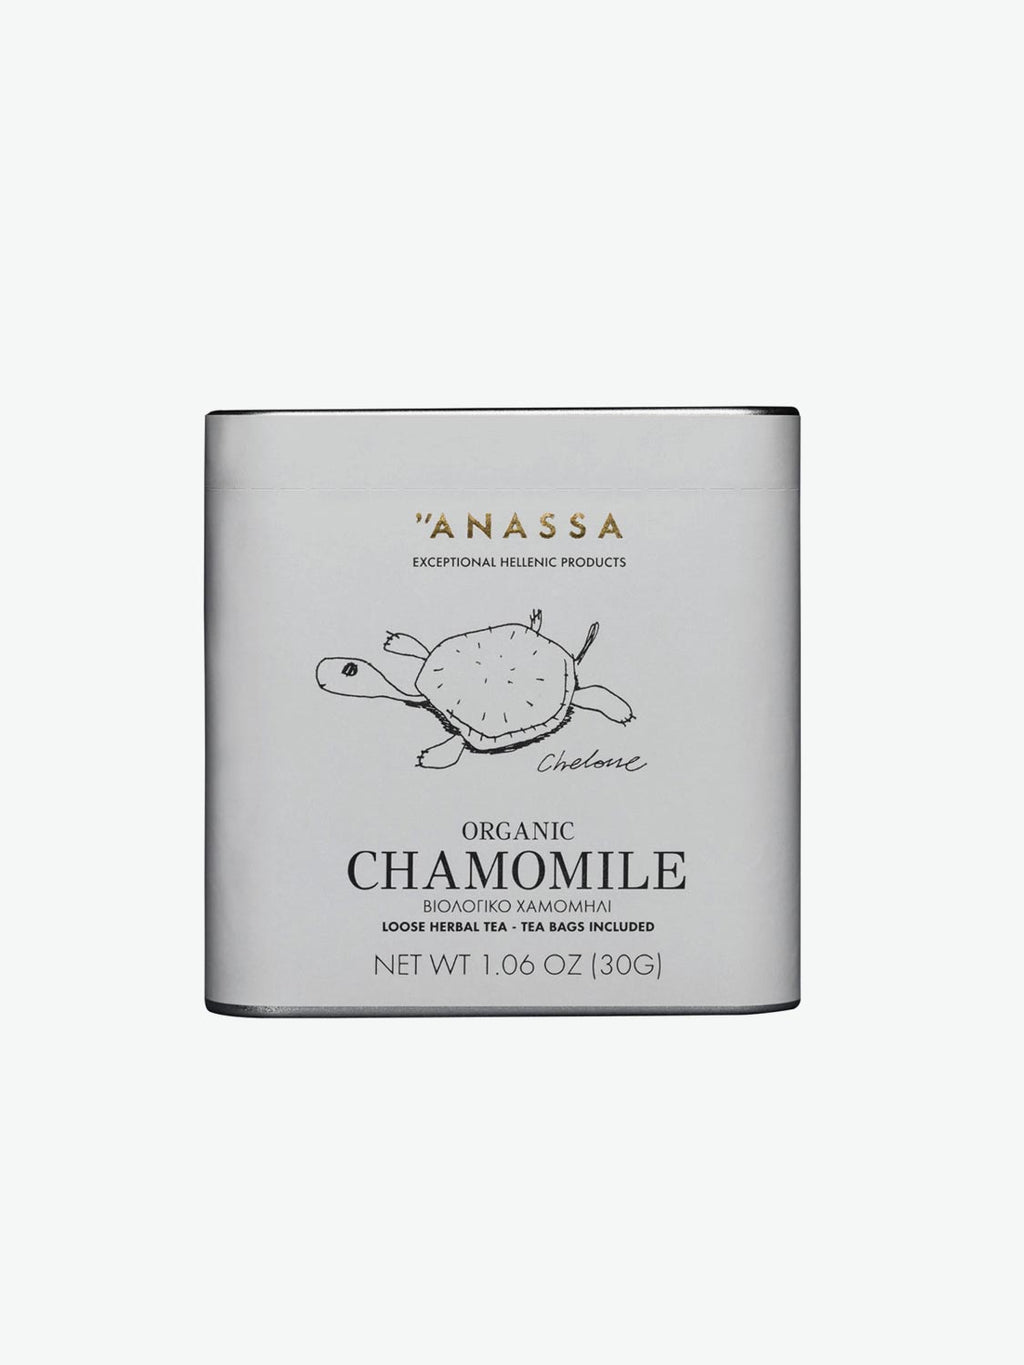 Anassa Organics Chamomile | A